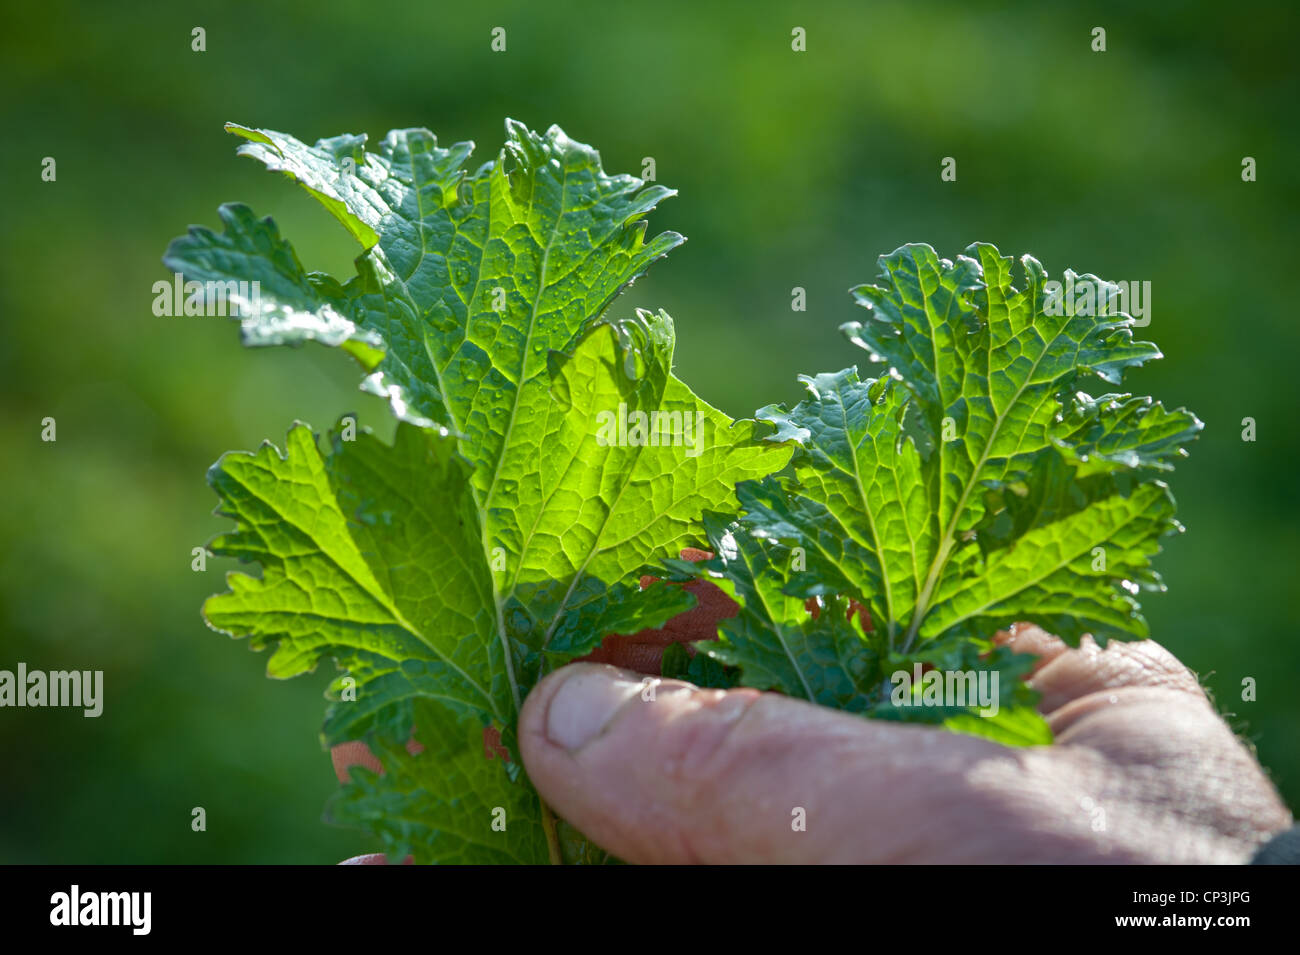 Farmer's hand holding fresh leafy green vegetables Stock Photo